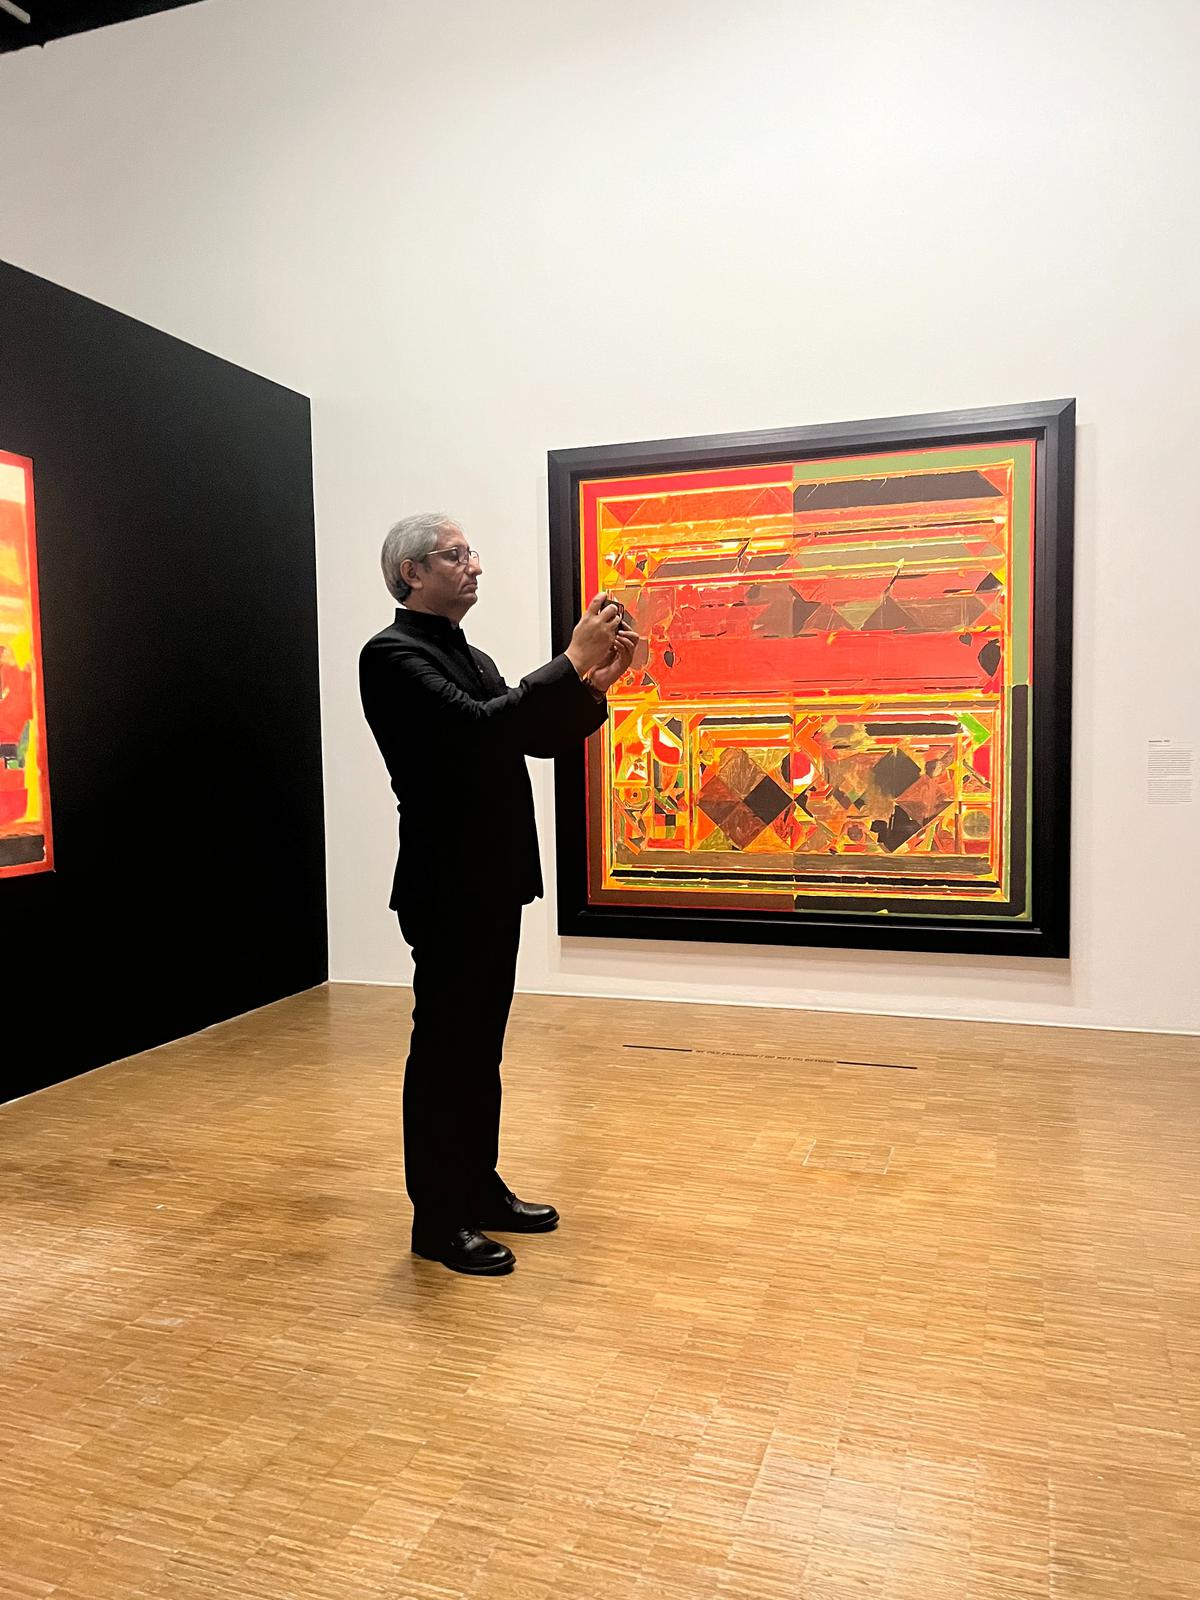 Magsaysay awardee and journalist Ravish Kumar takes in the Raza paintings on display at Centre Pompidou.